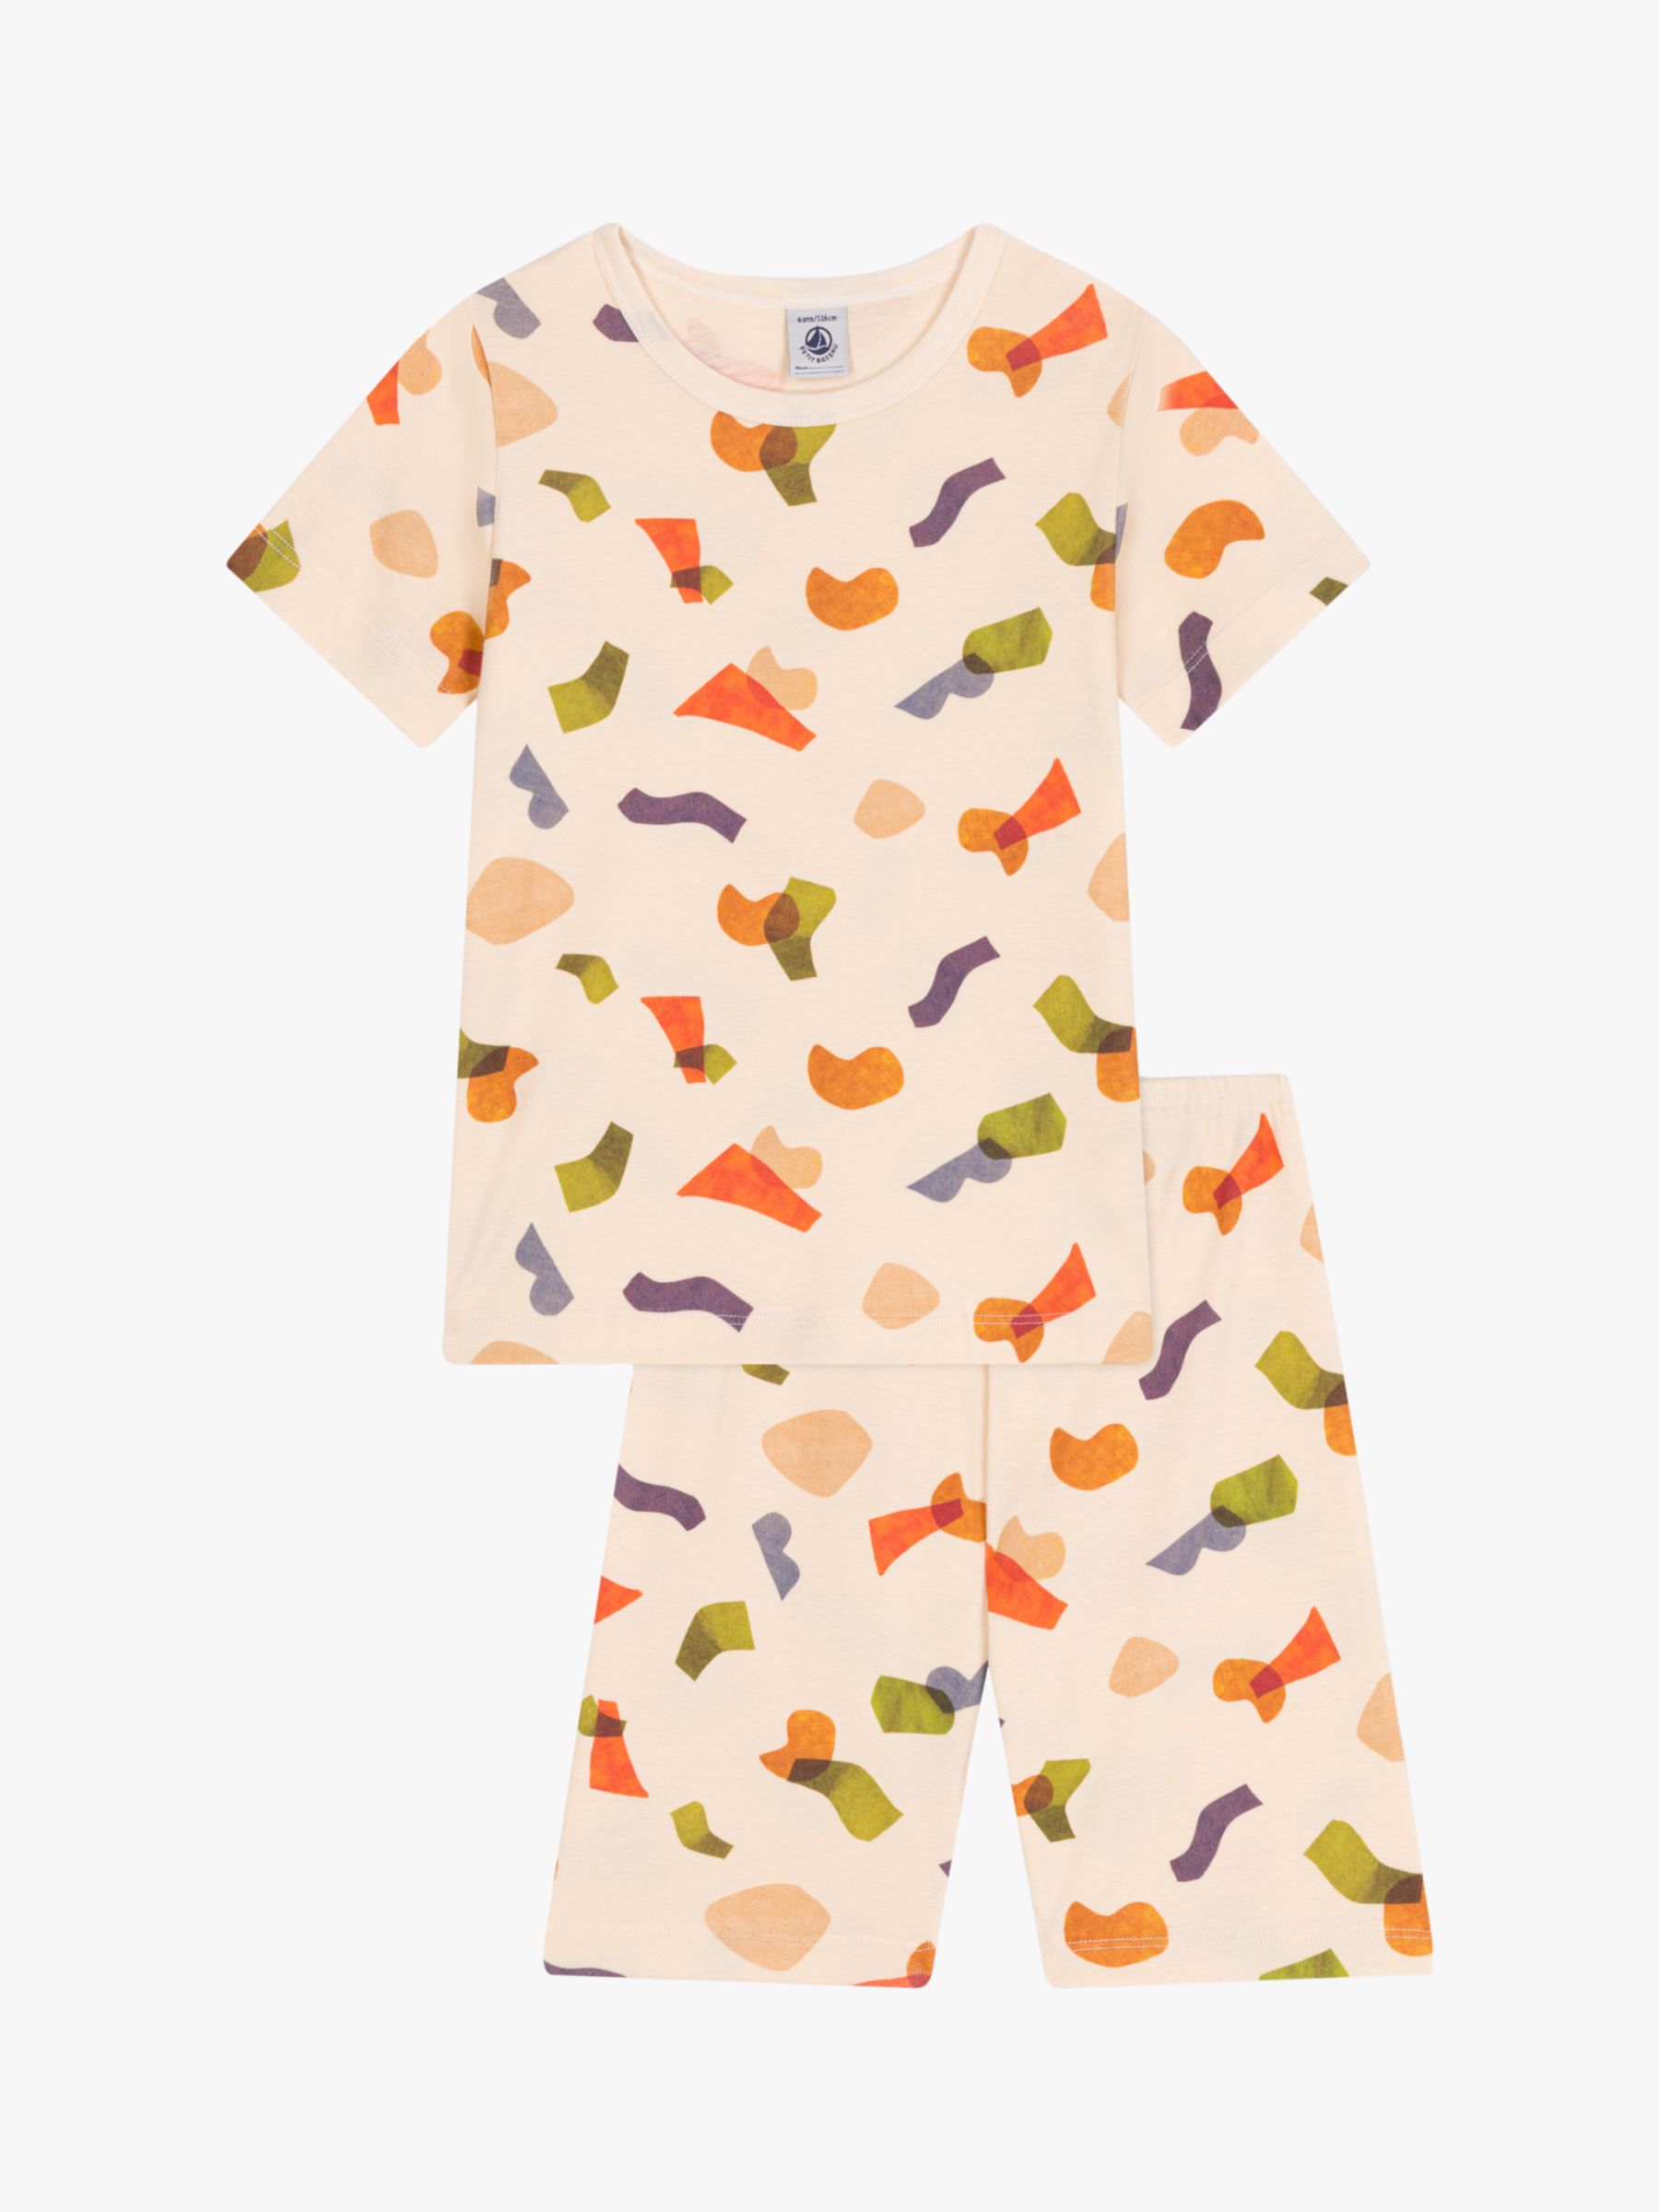 Petit Bateau Kids' Abstract Print Shorts Pyjamas, Avalanche/Multi, 8Y